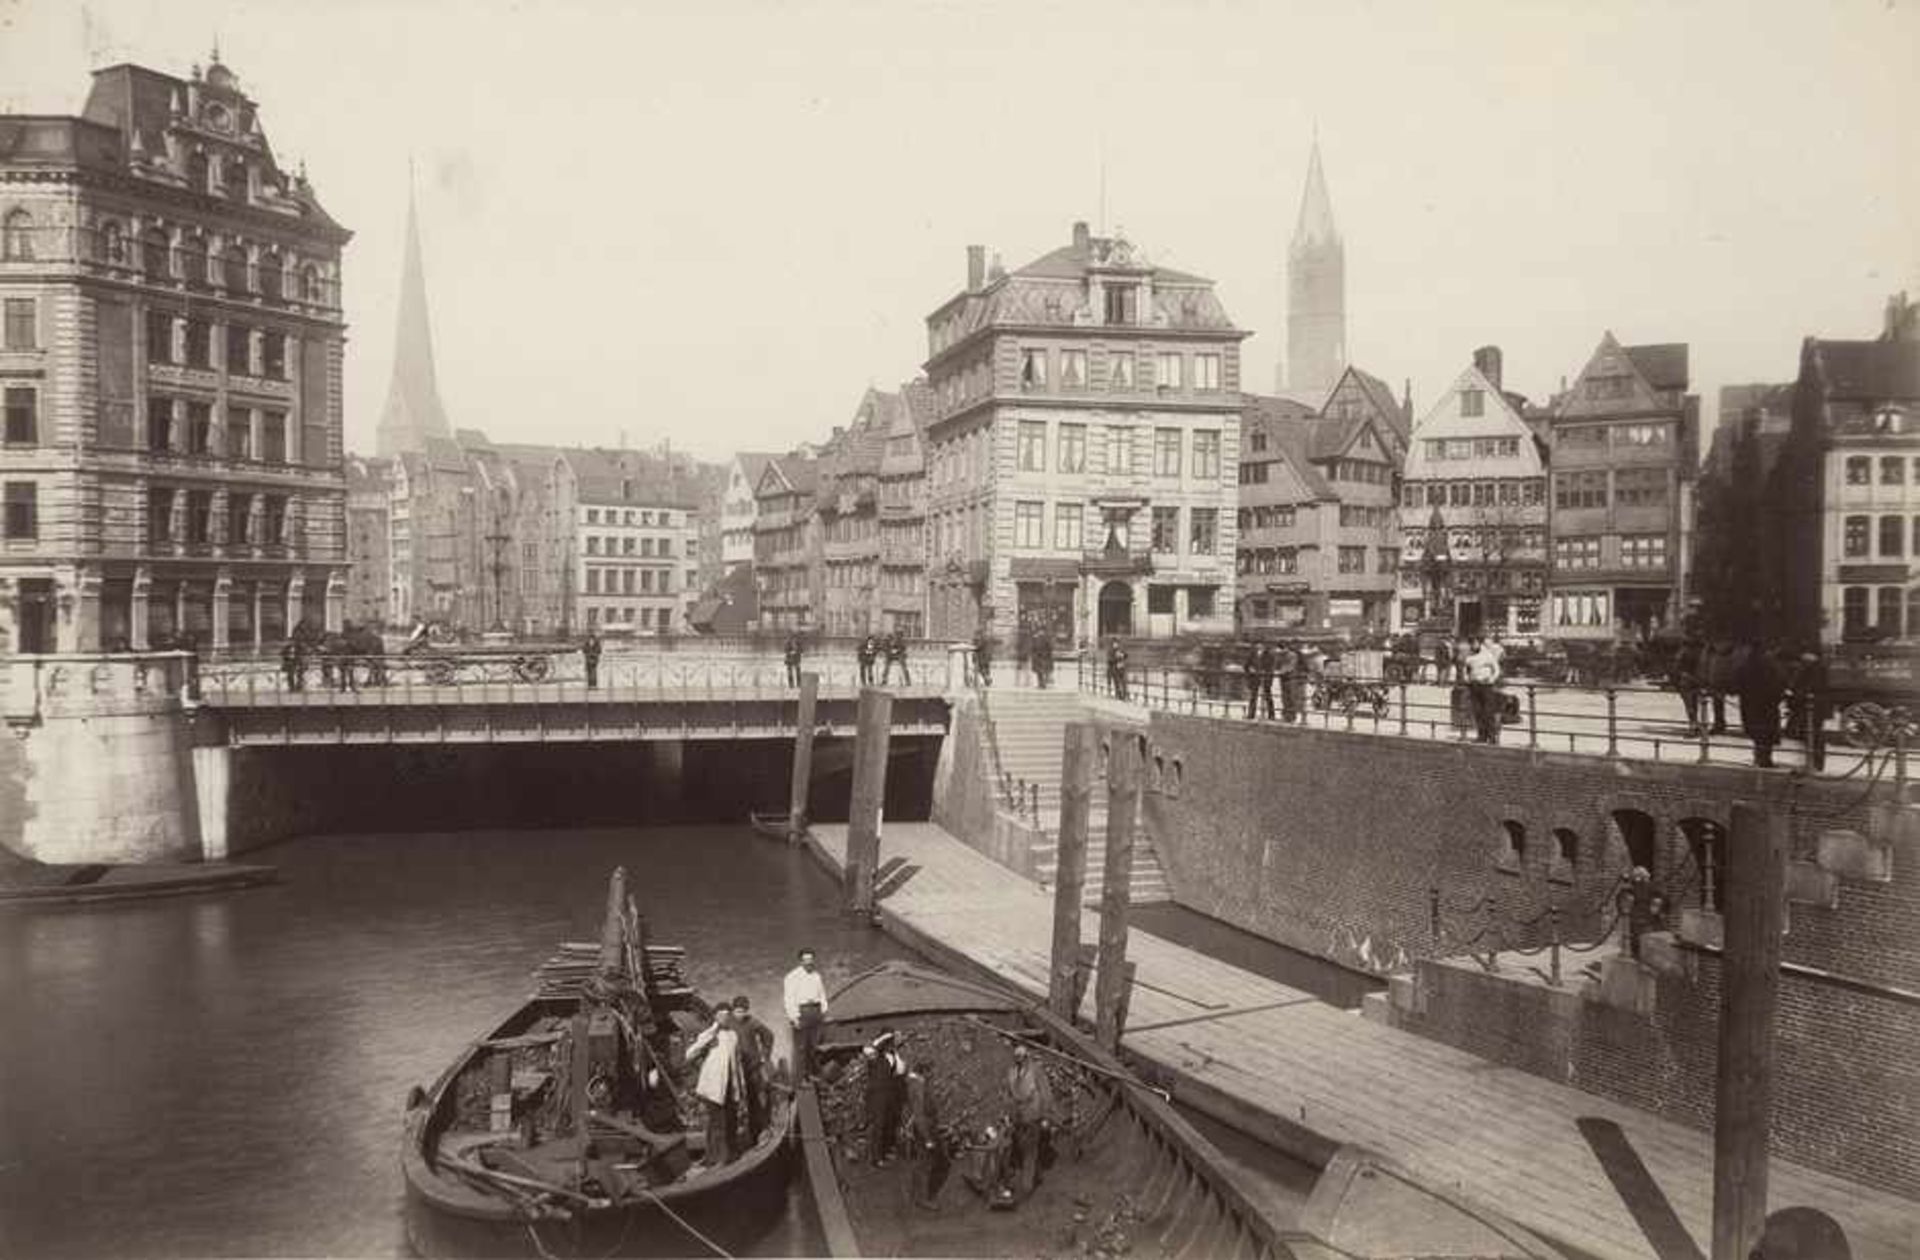 Koppmann, Georg: Views of HamburgViews of Hamburg. 1879 -1885. 15 large-format albumen prints.